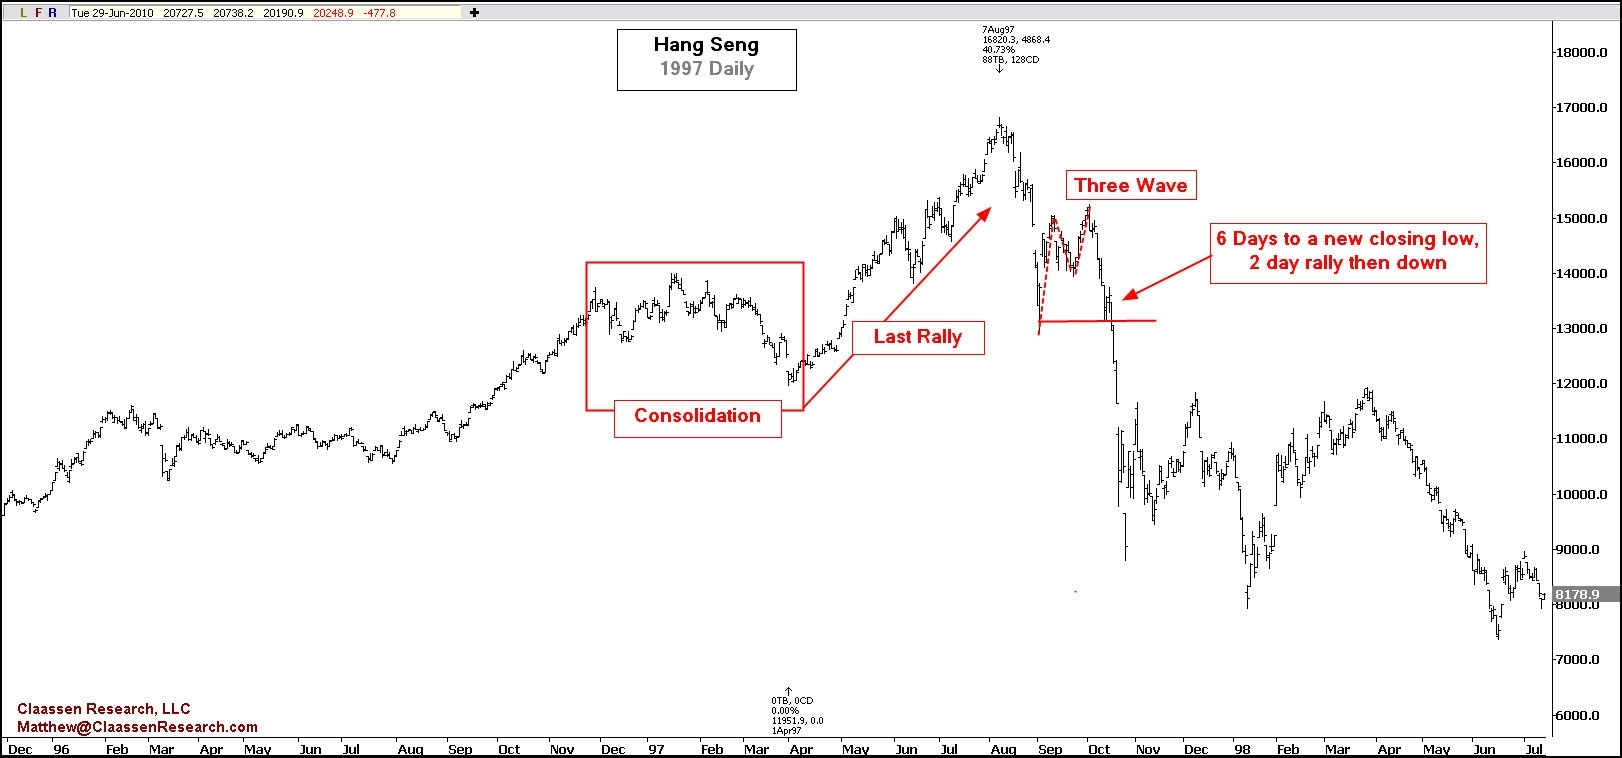 Hang Seng Index Daily 1997